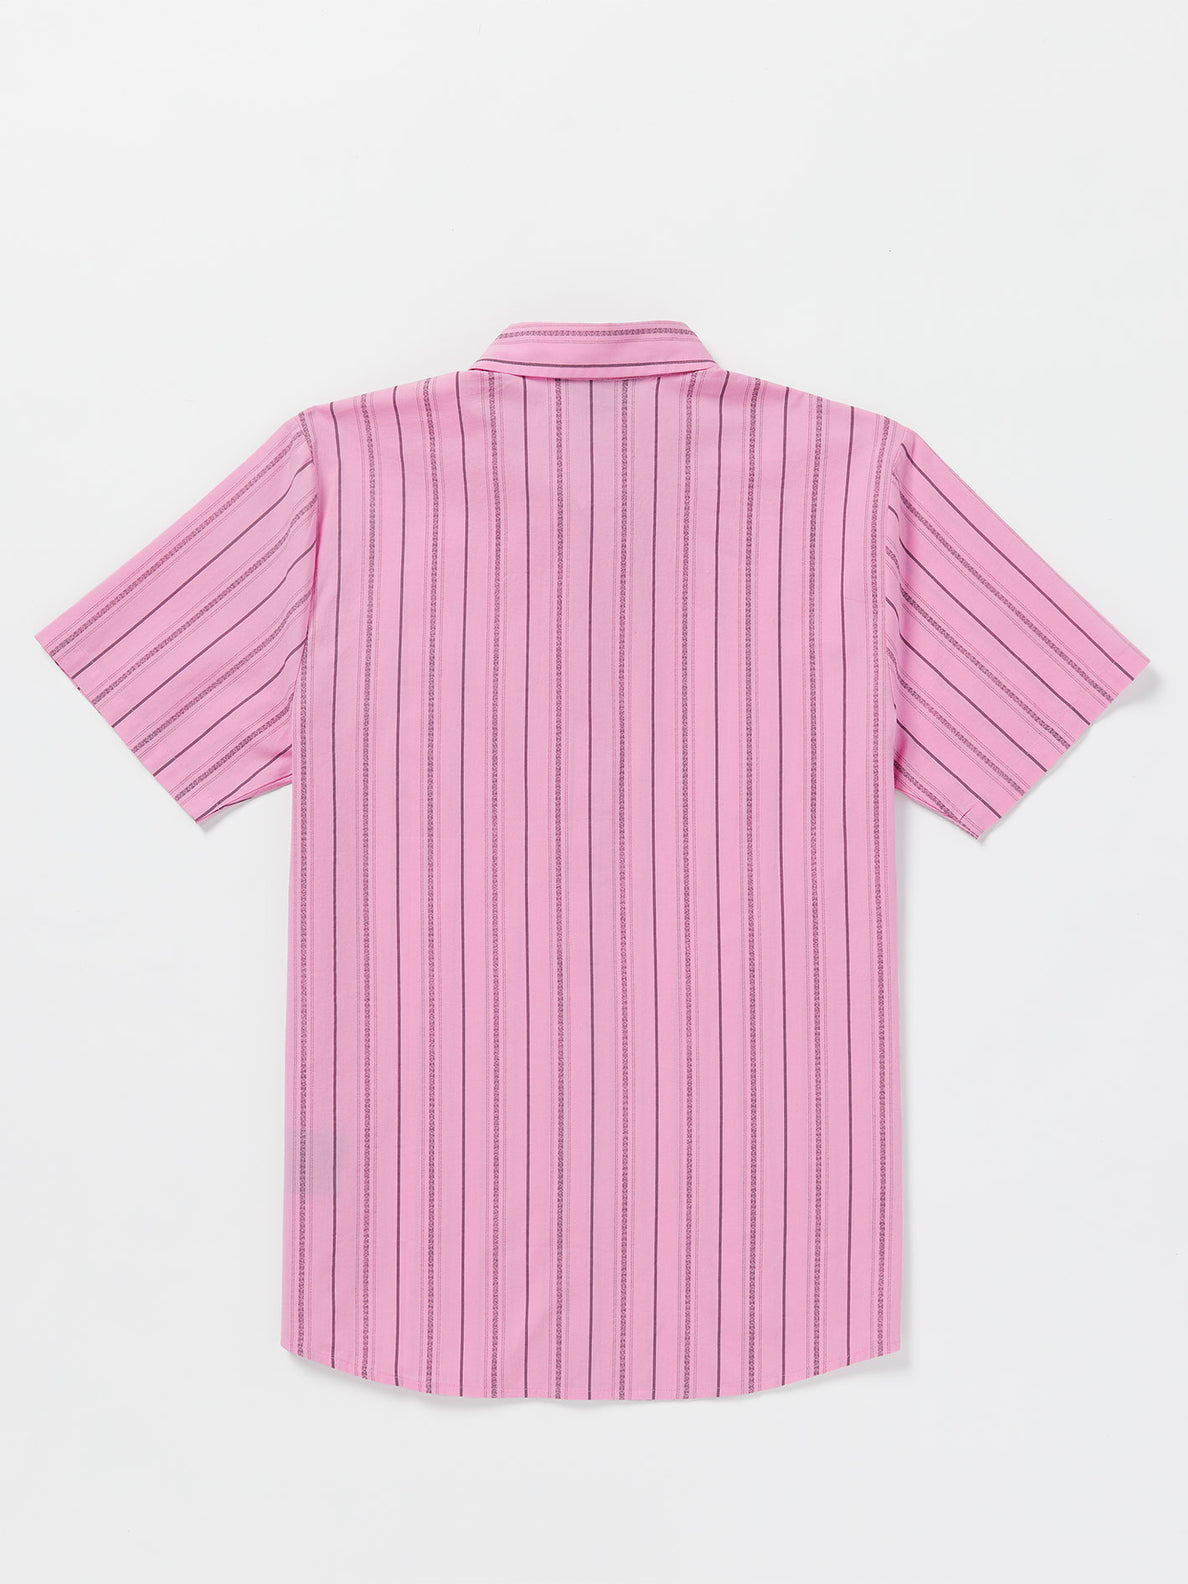 Warbler Short Sleeve Woven Shirt - Prism Pink